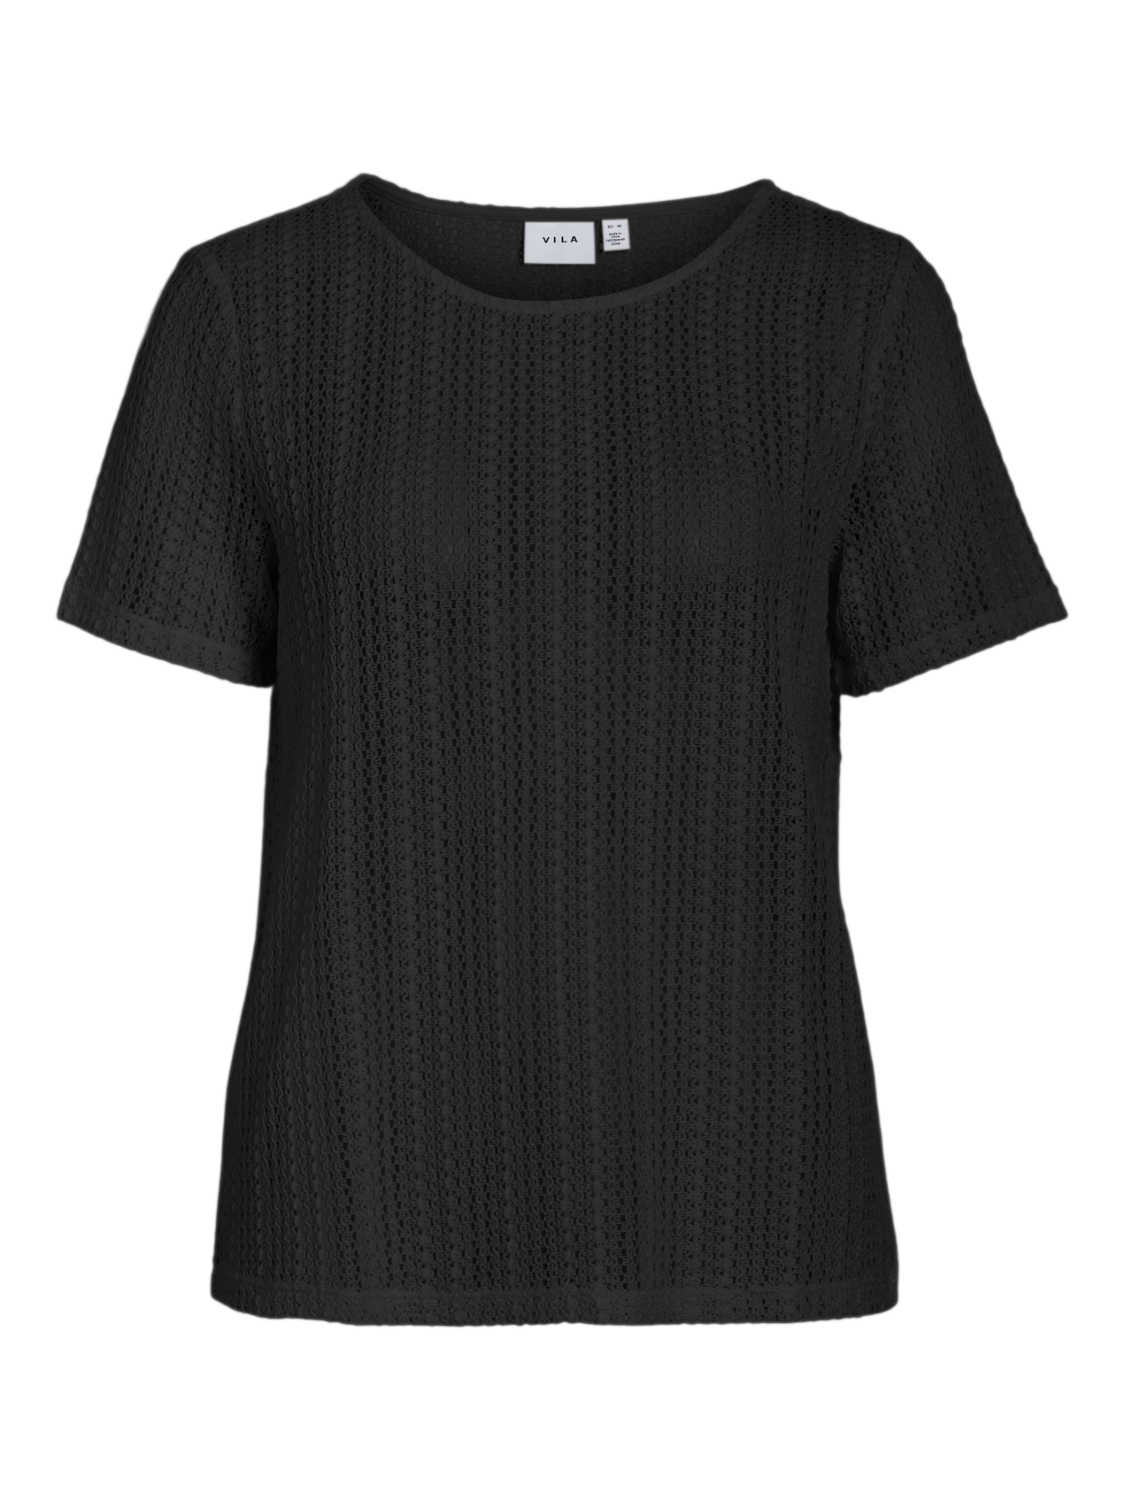 VIGARDEA T-Shirt - Black Beauty